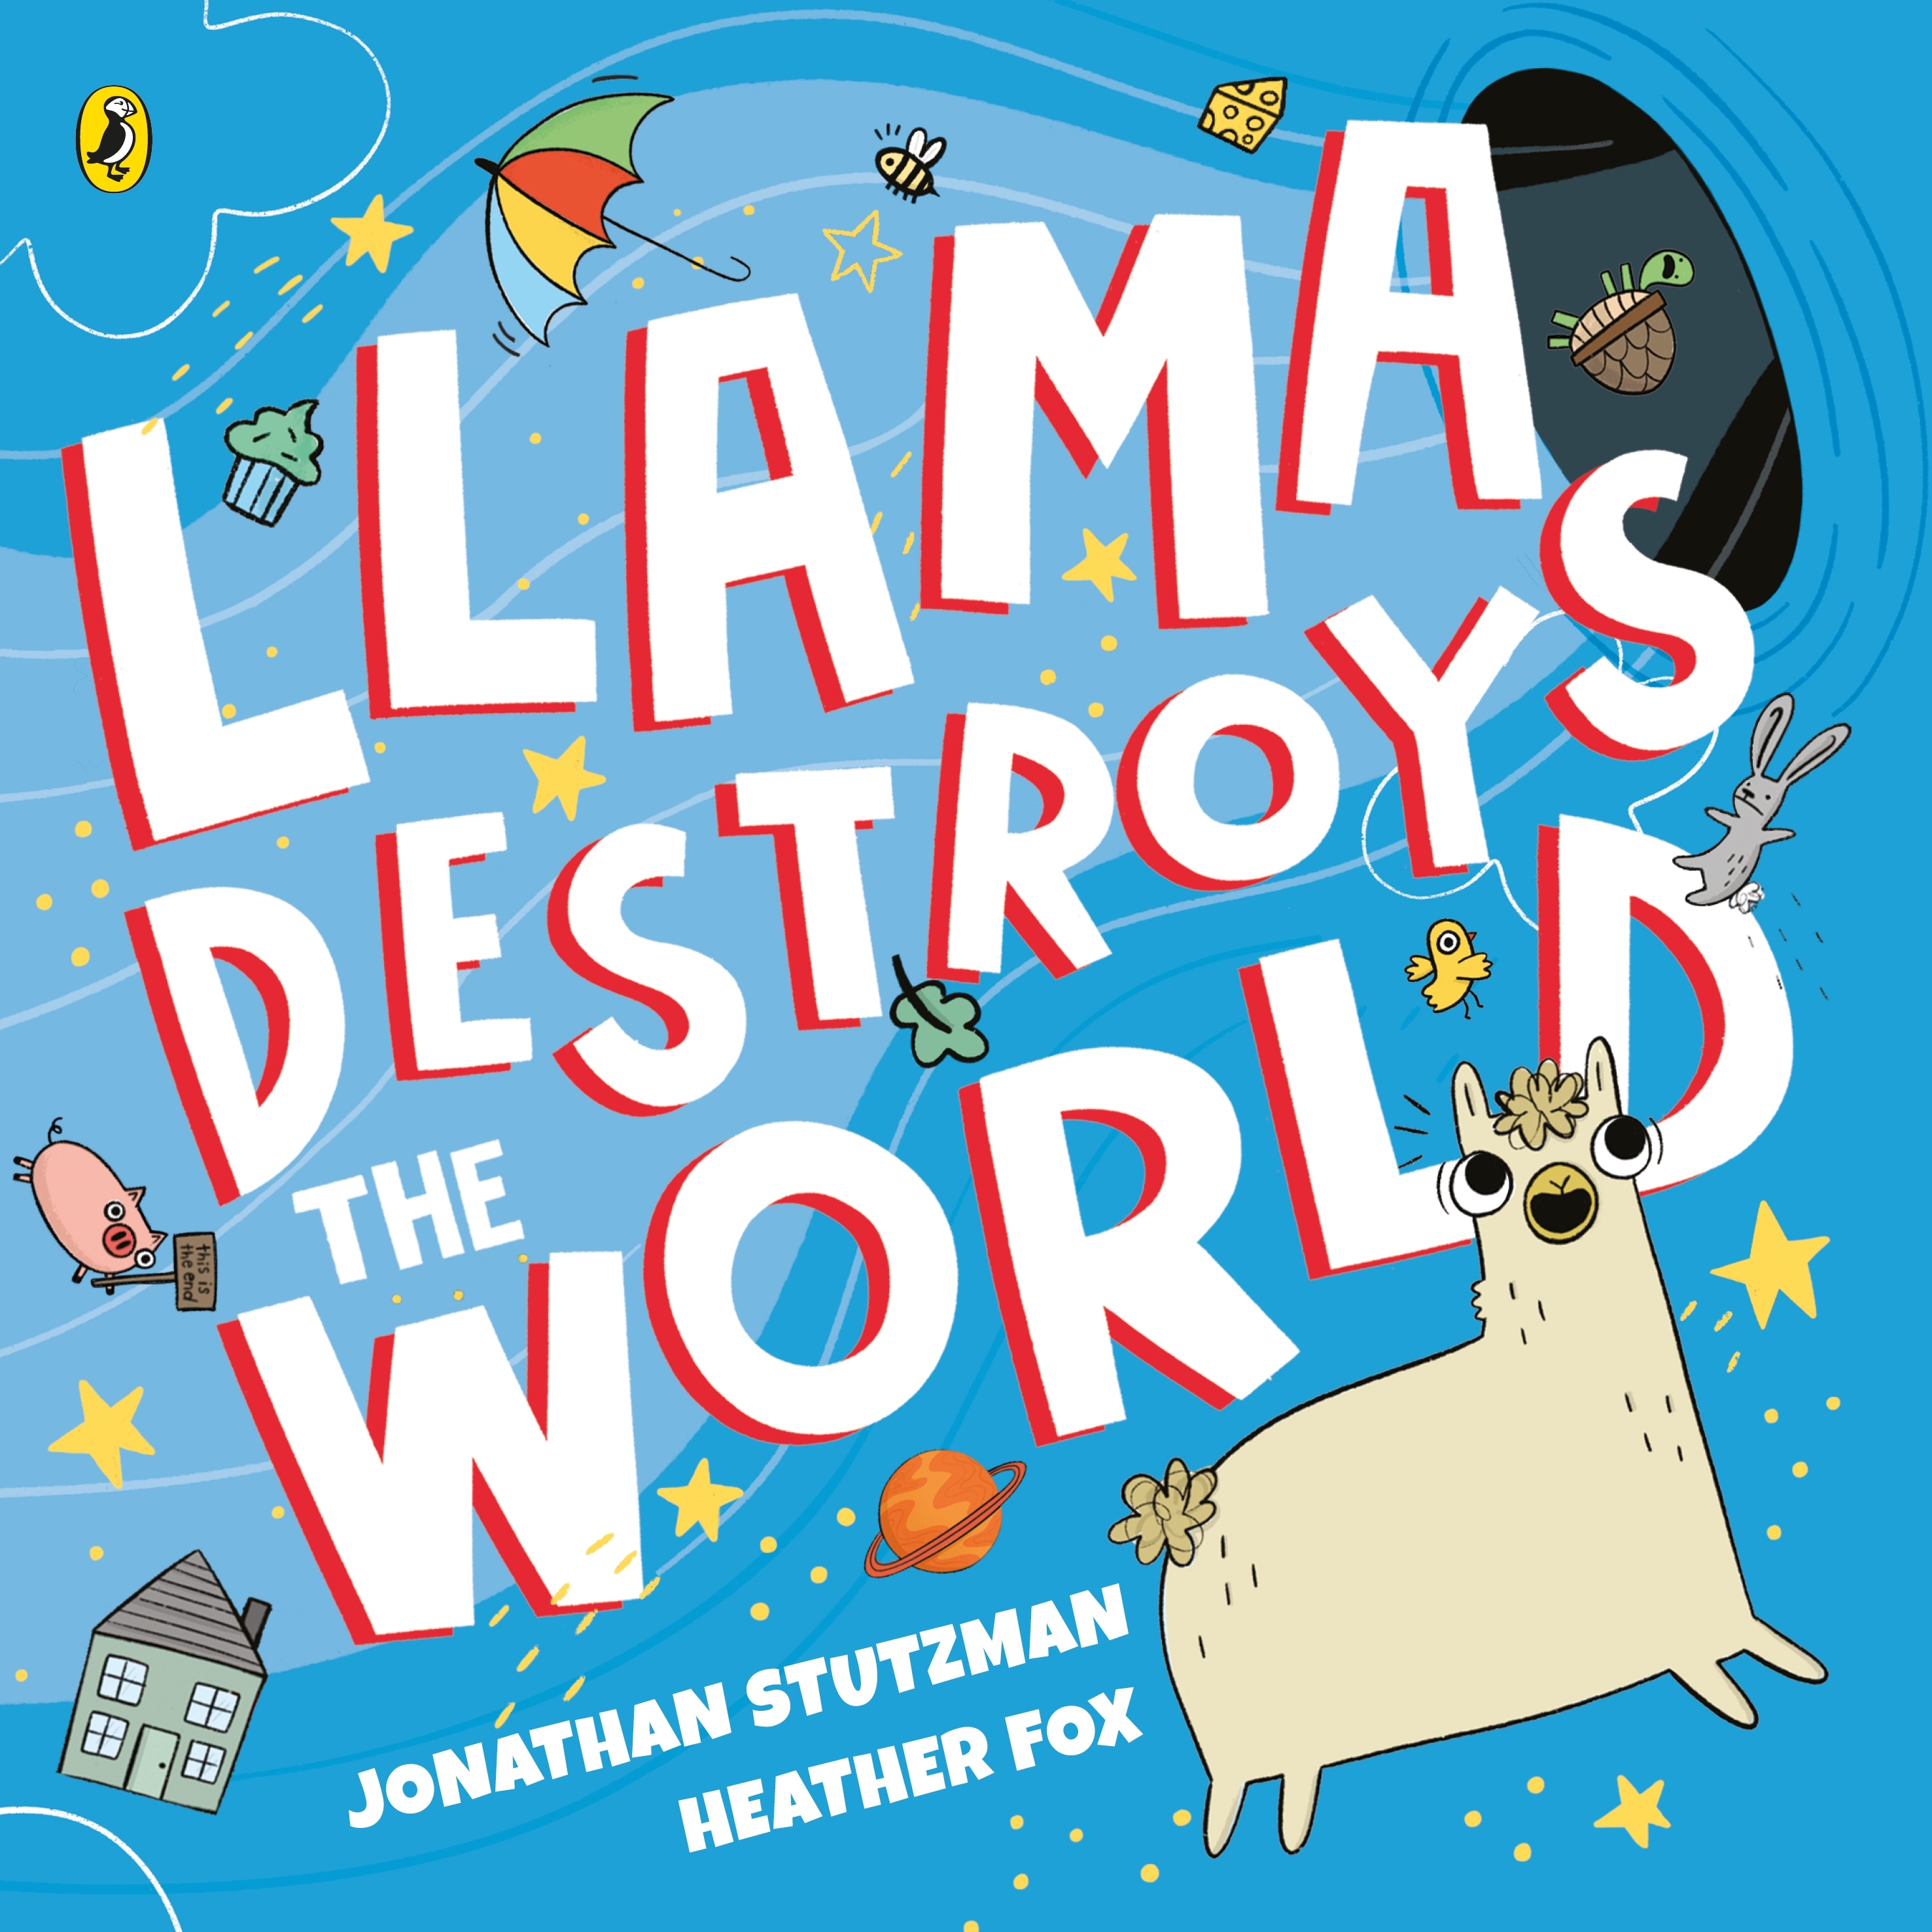 Book “Llama Destroys the World” by Jonathan Stutzman, Heather Fox — February 18, 2021